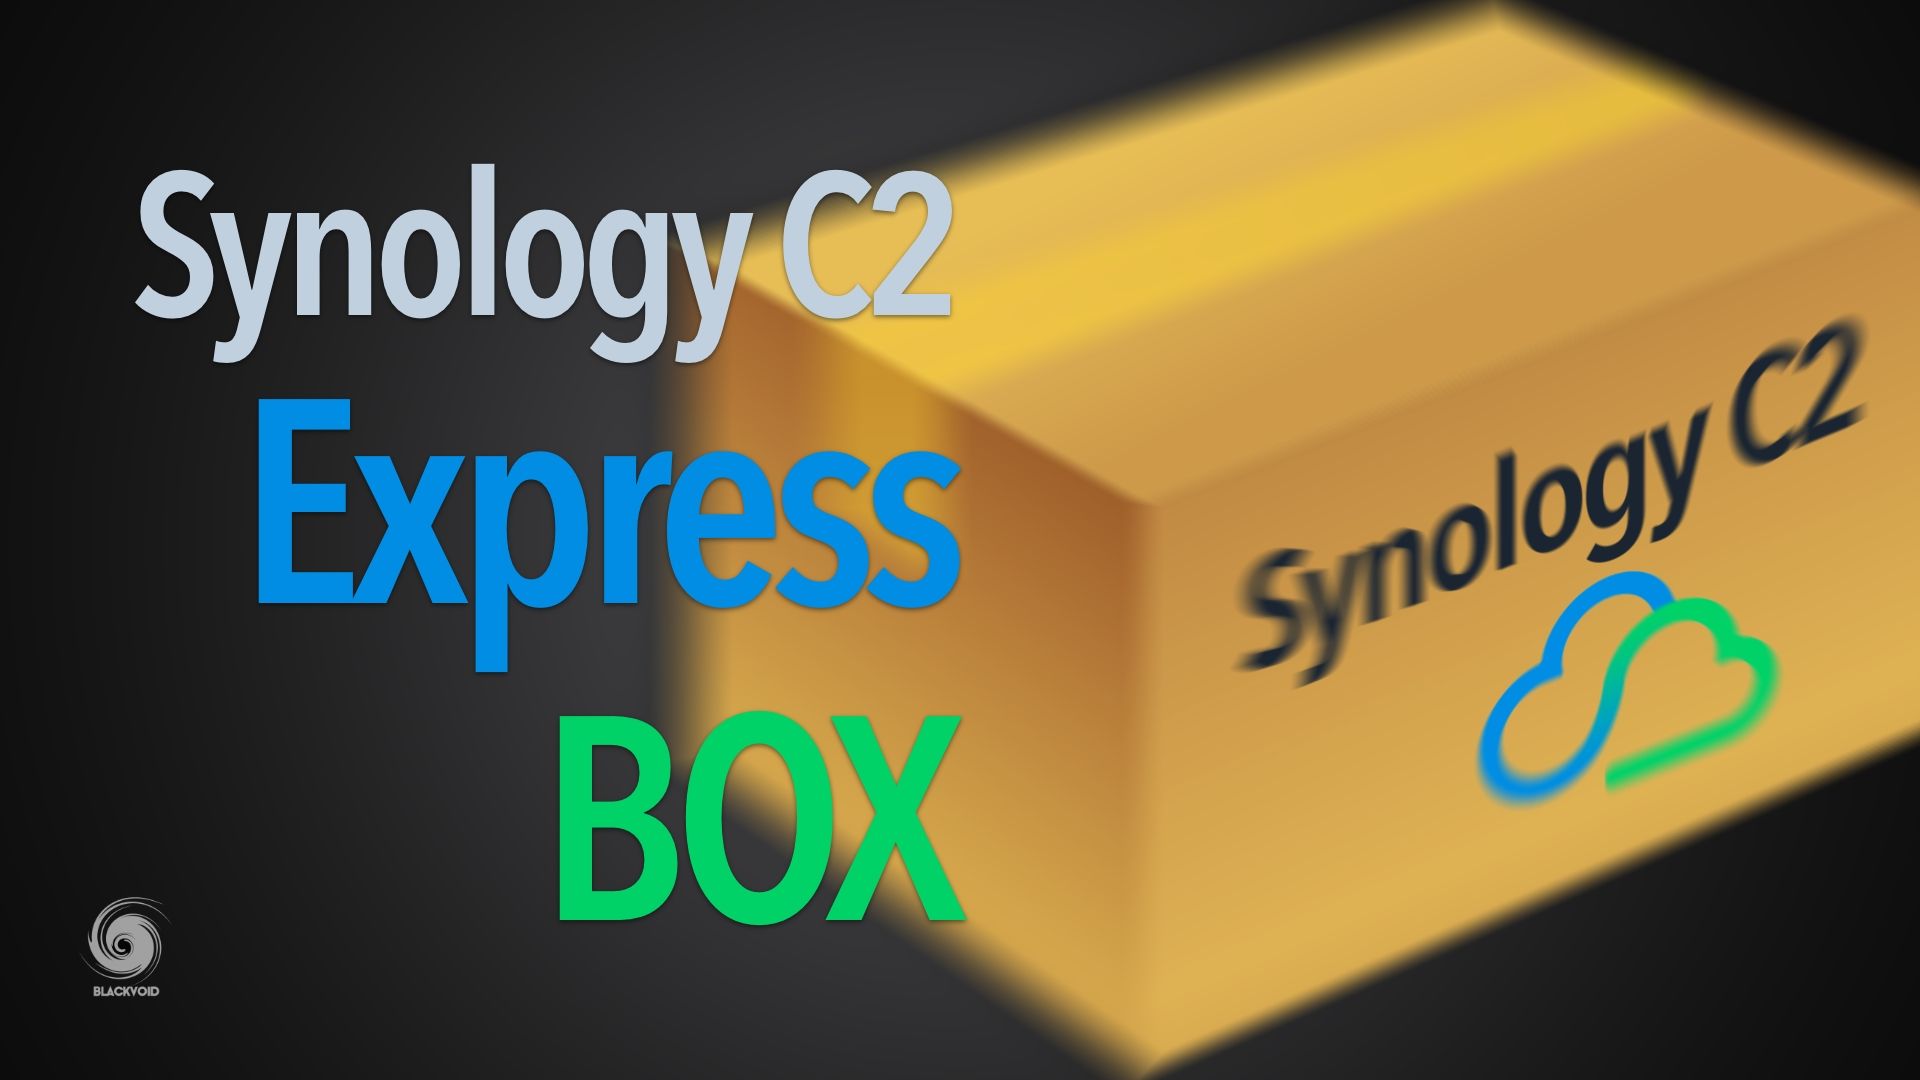 Synology C2 - Express Box